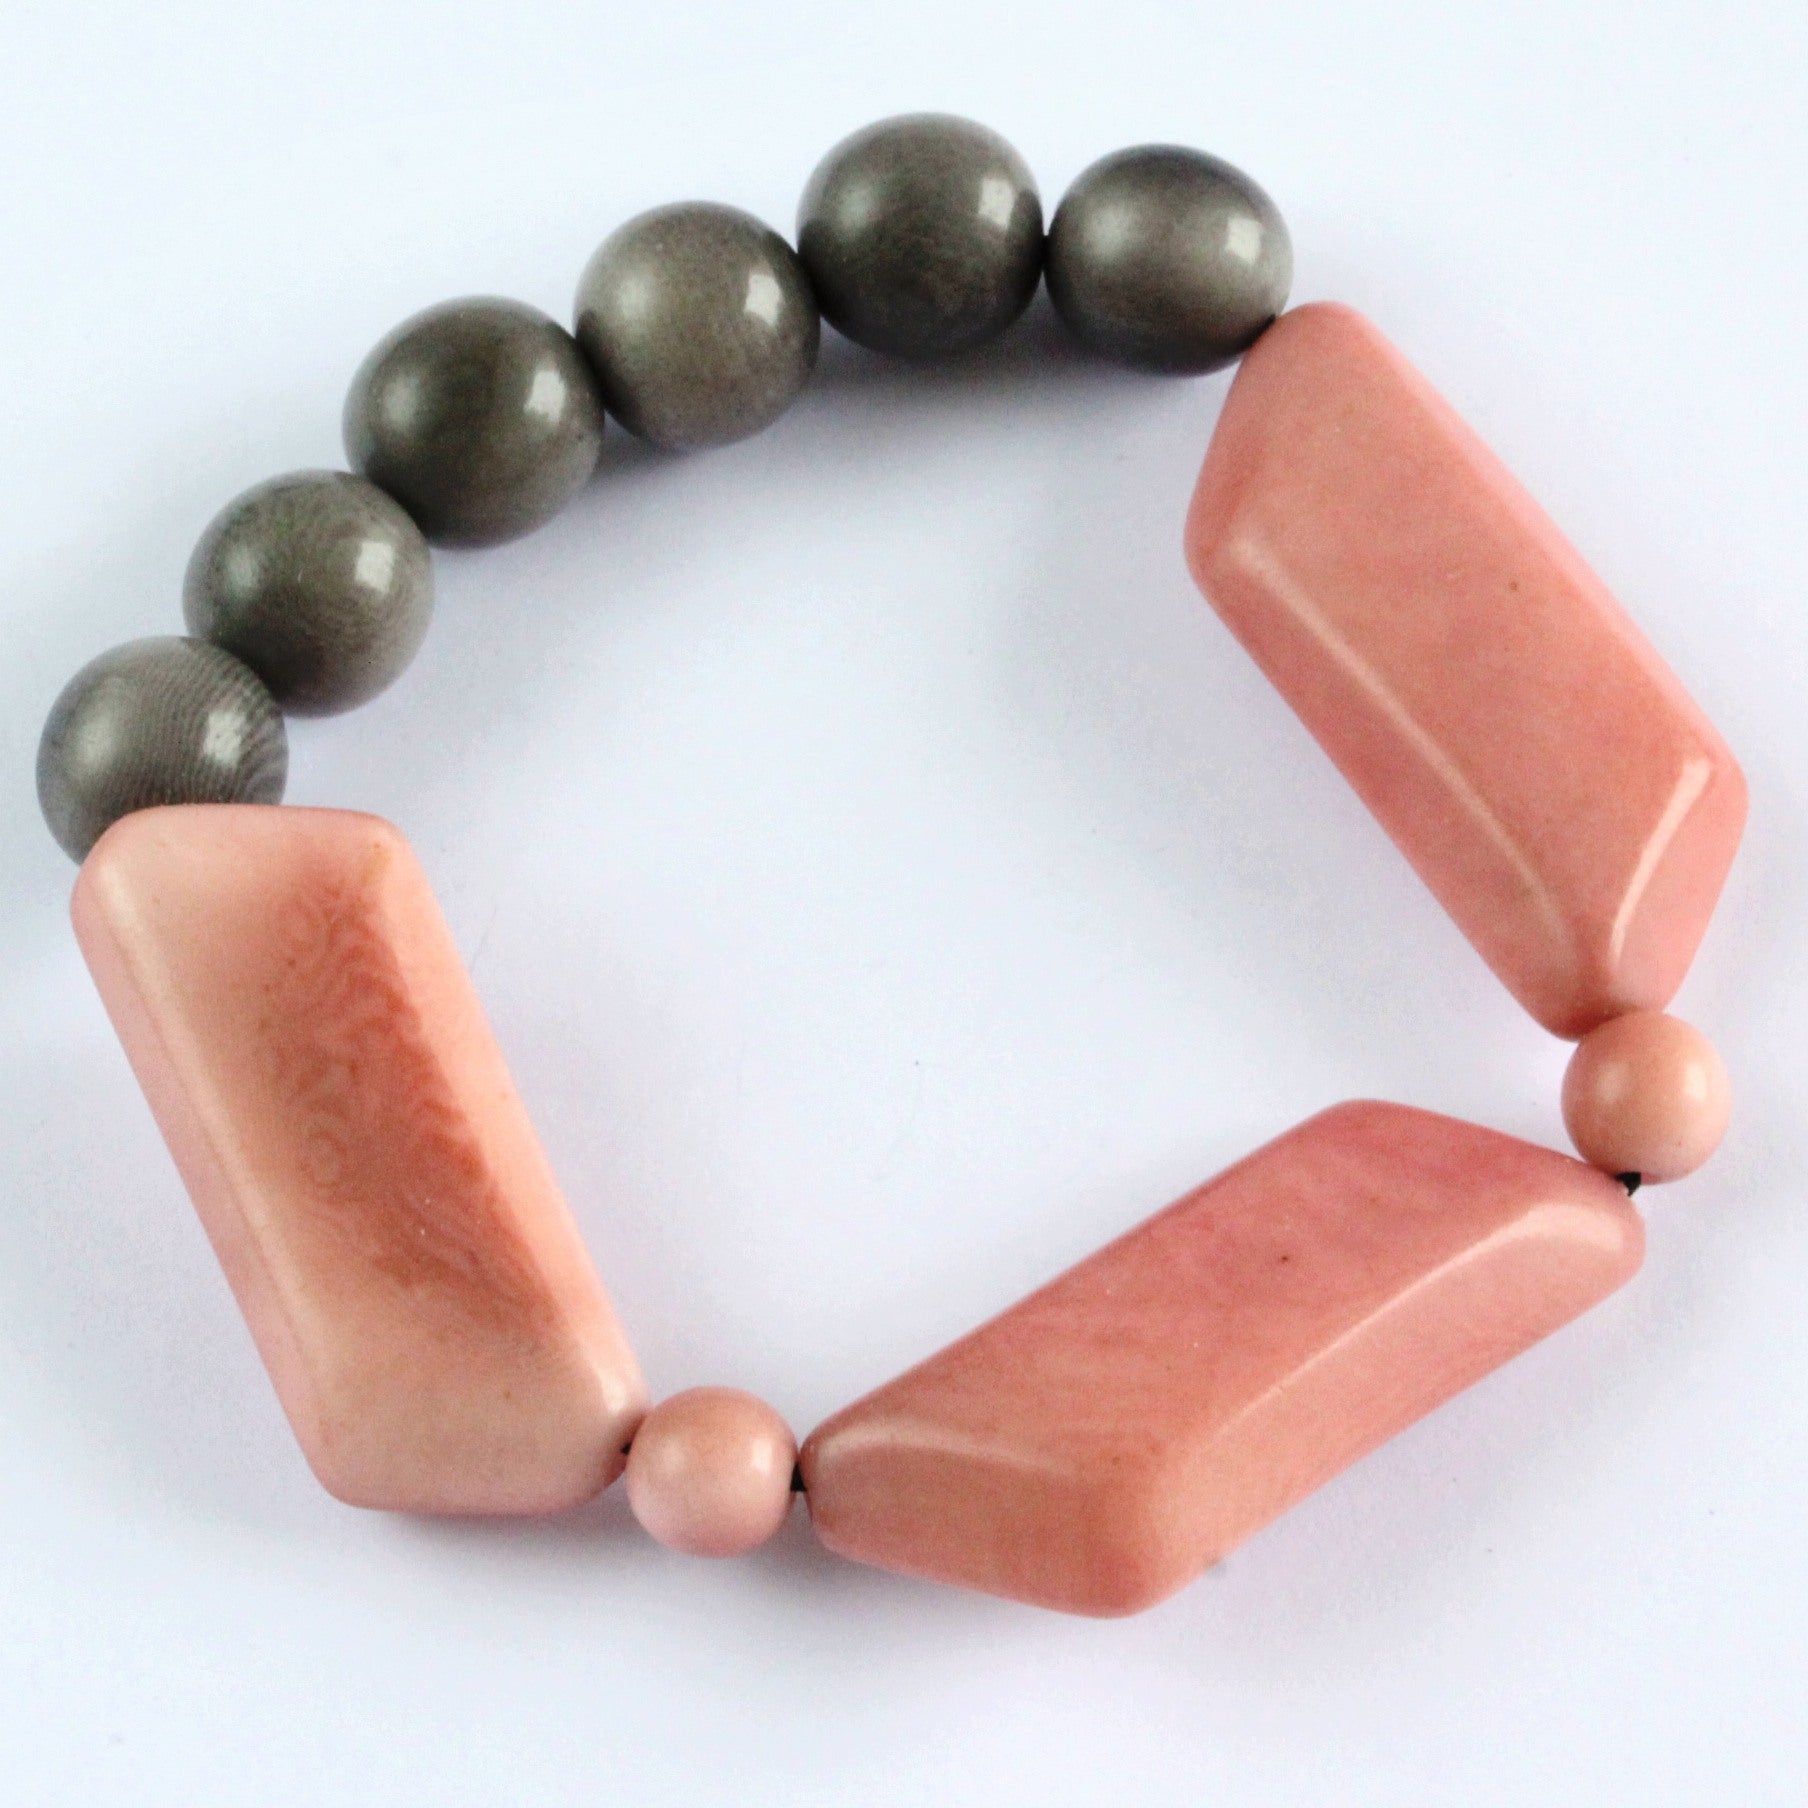 Handmade bracelet, tagua nut, sustainable, pink, grey